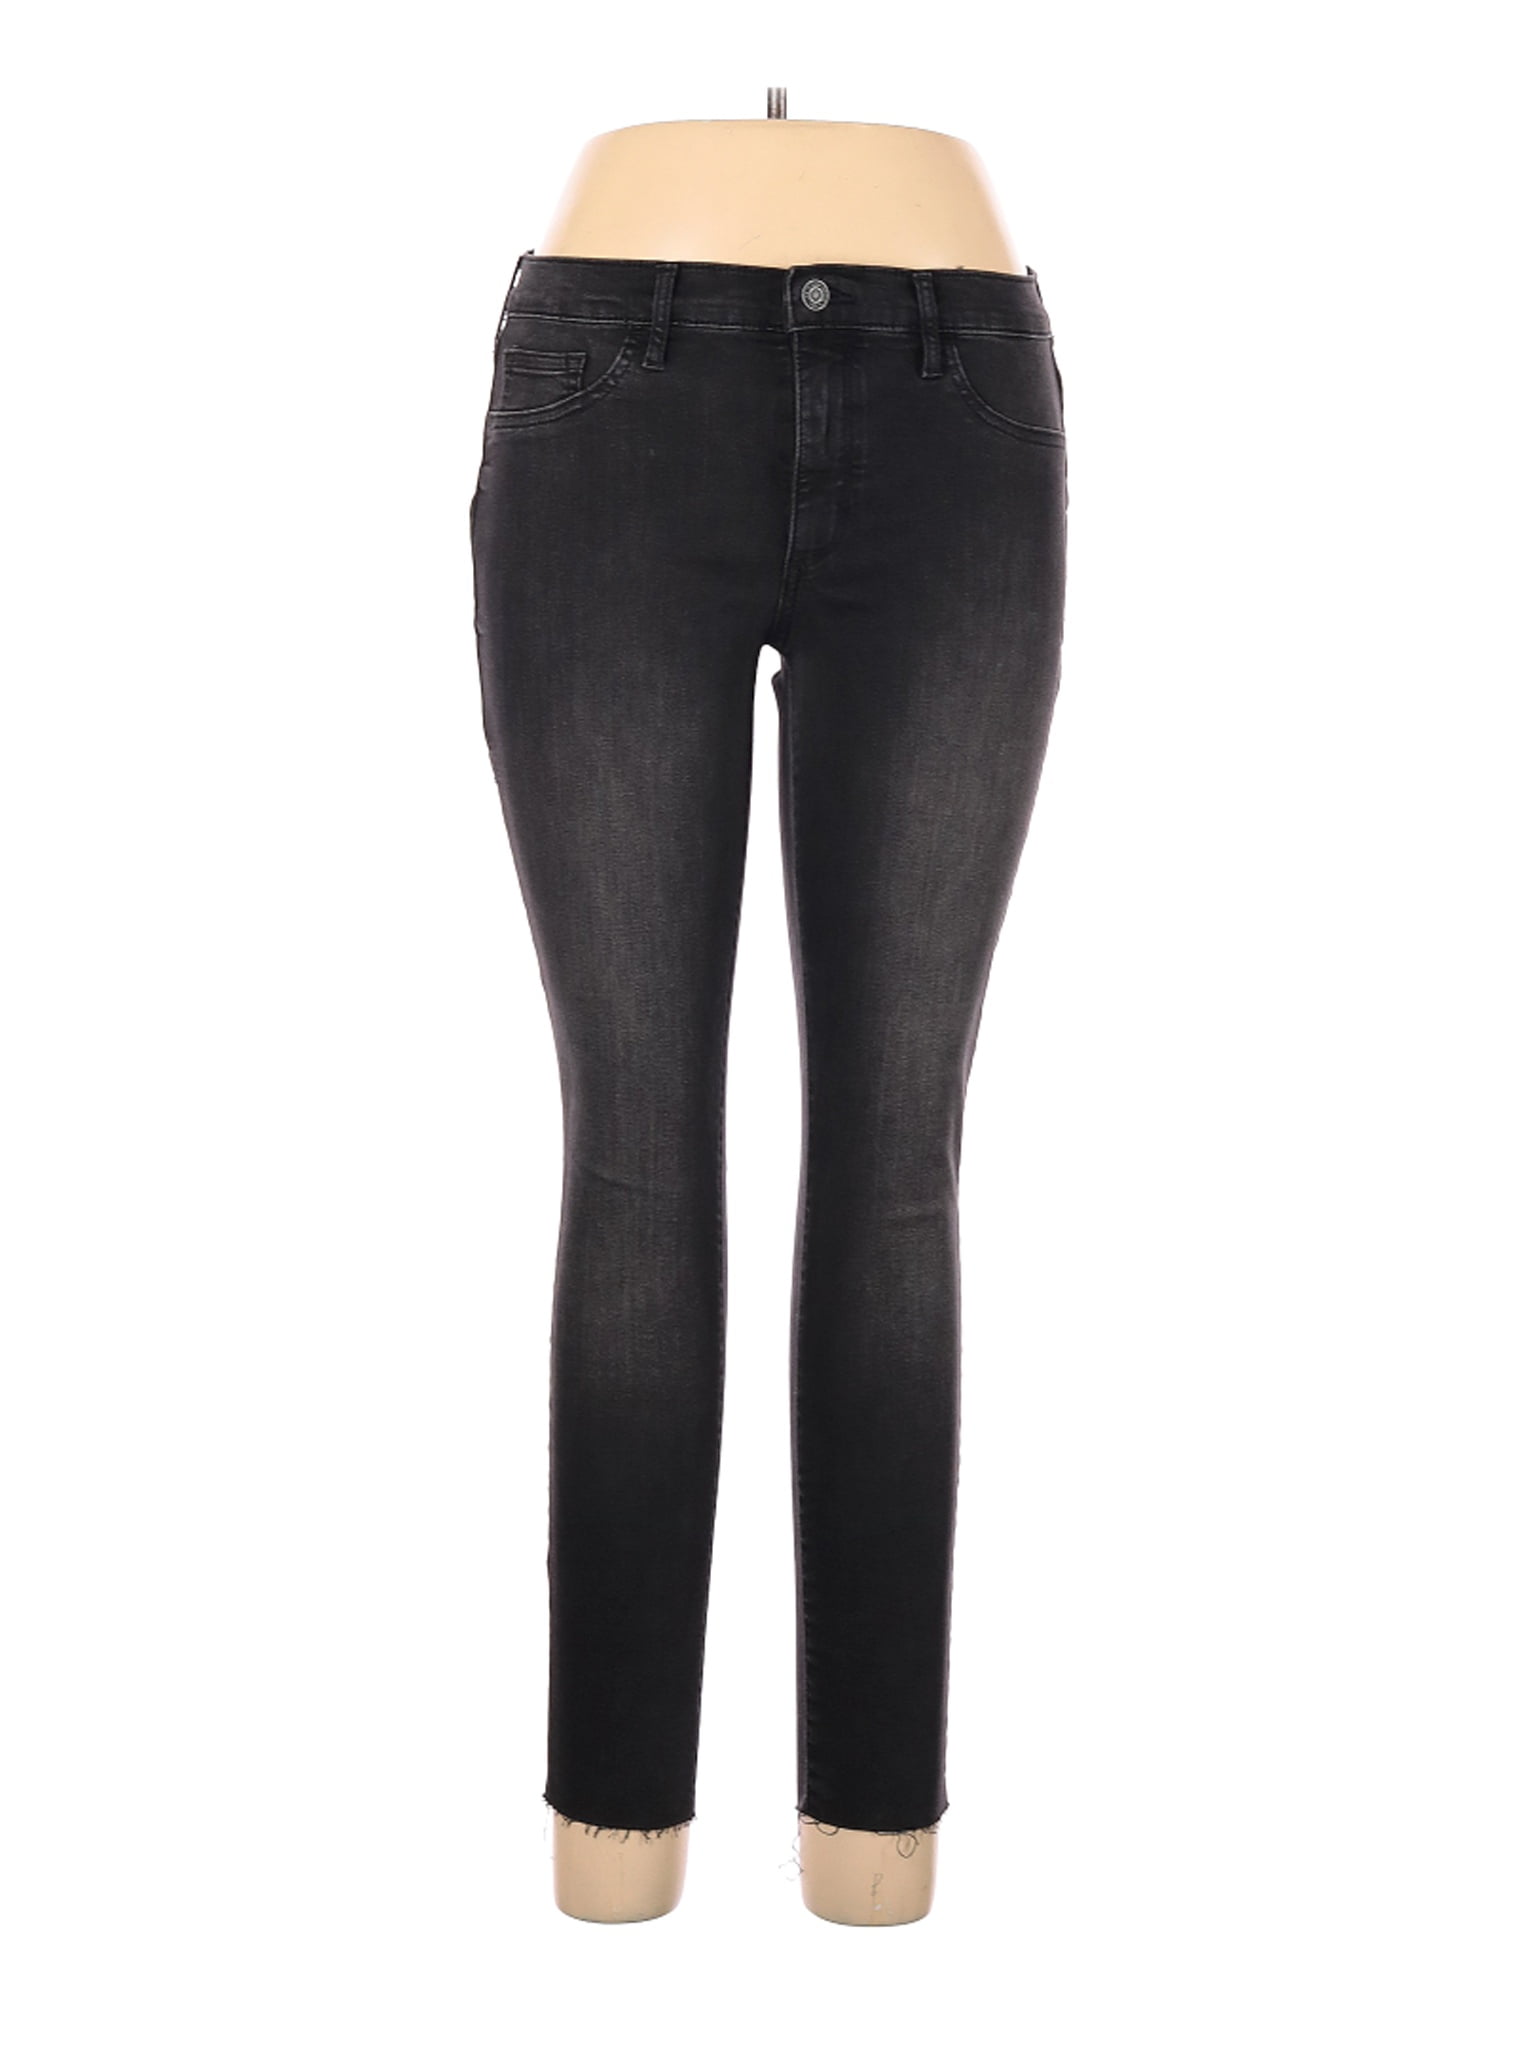 Gap - Pre-Owned Gap Women's Size 30W Jeans - Walmart.com - Walmart.com